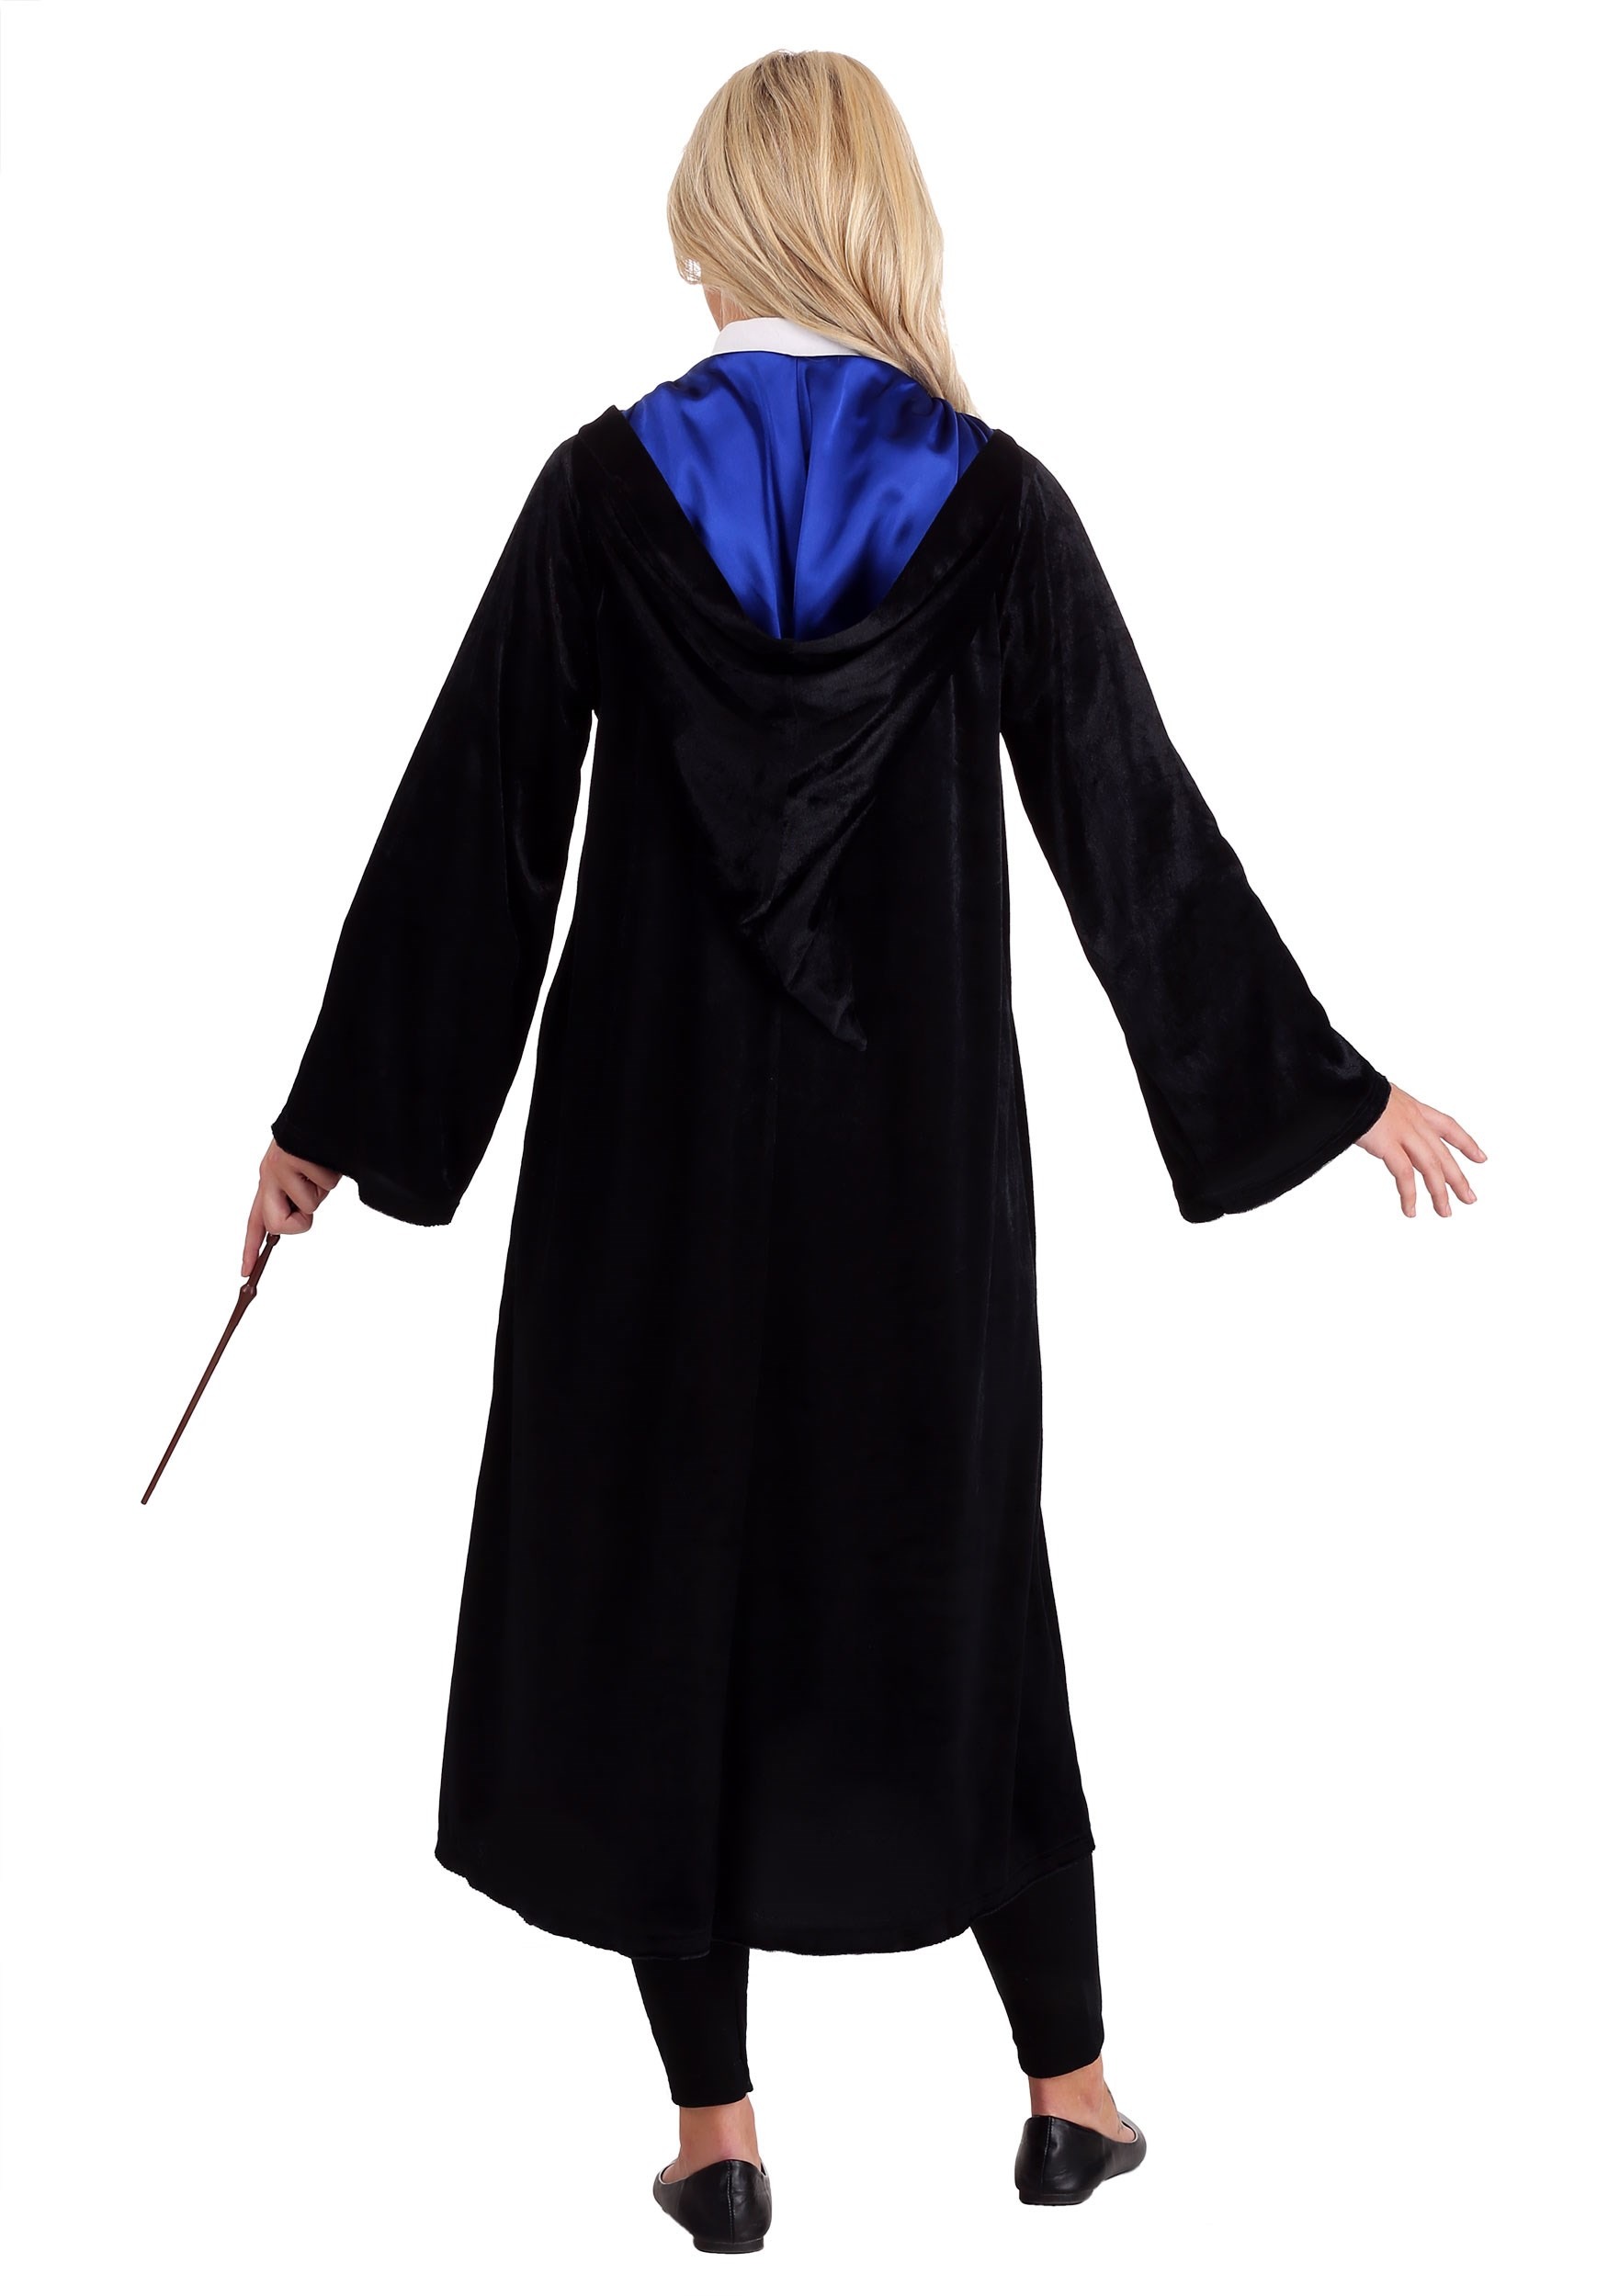 Ravenclaw Robe Deluxe Harry Potter Wizard Fancy Dress Halloween Child  Costume